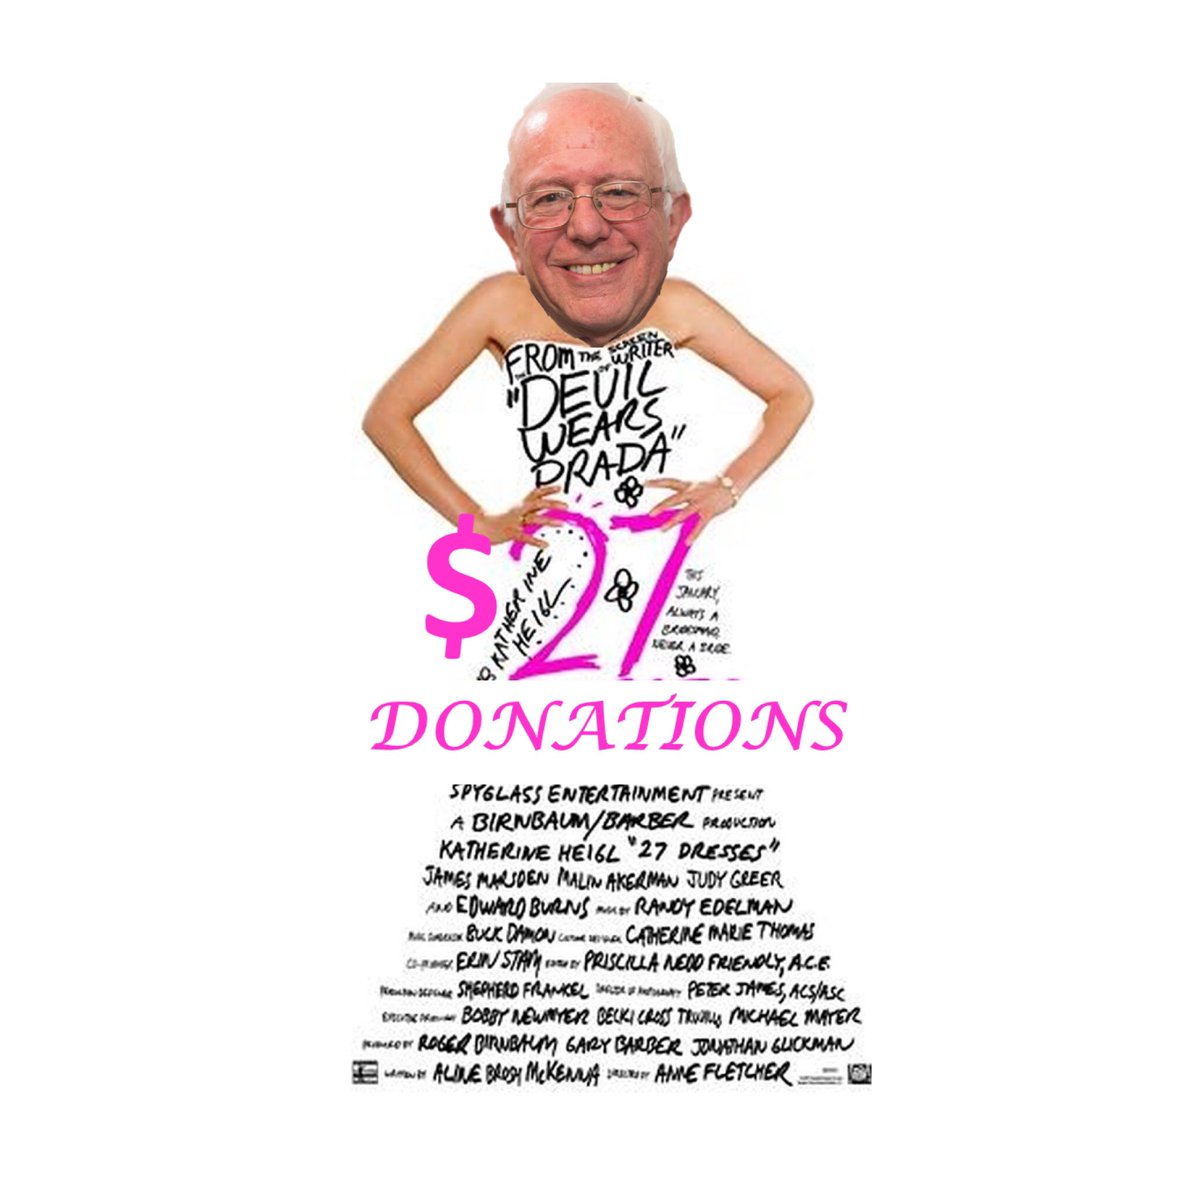 RT @SukieConley: $27 Donations #BernieHillaryRomComs https://t.co/xBclzRAK7I